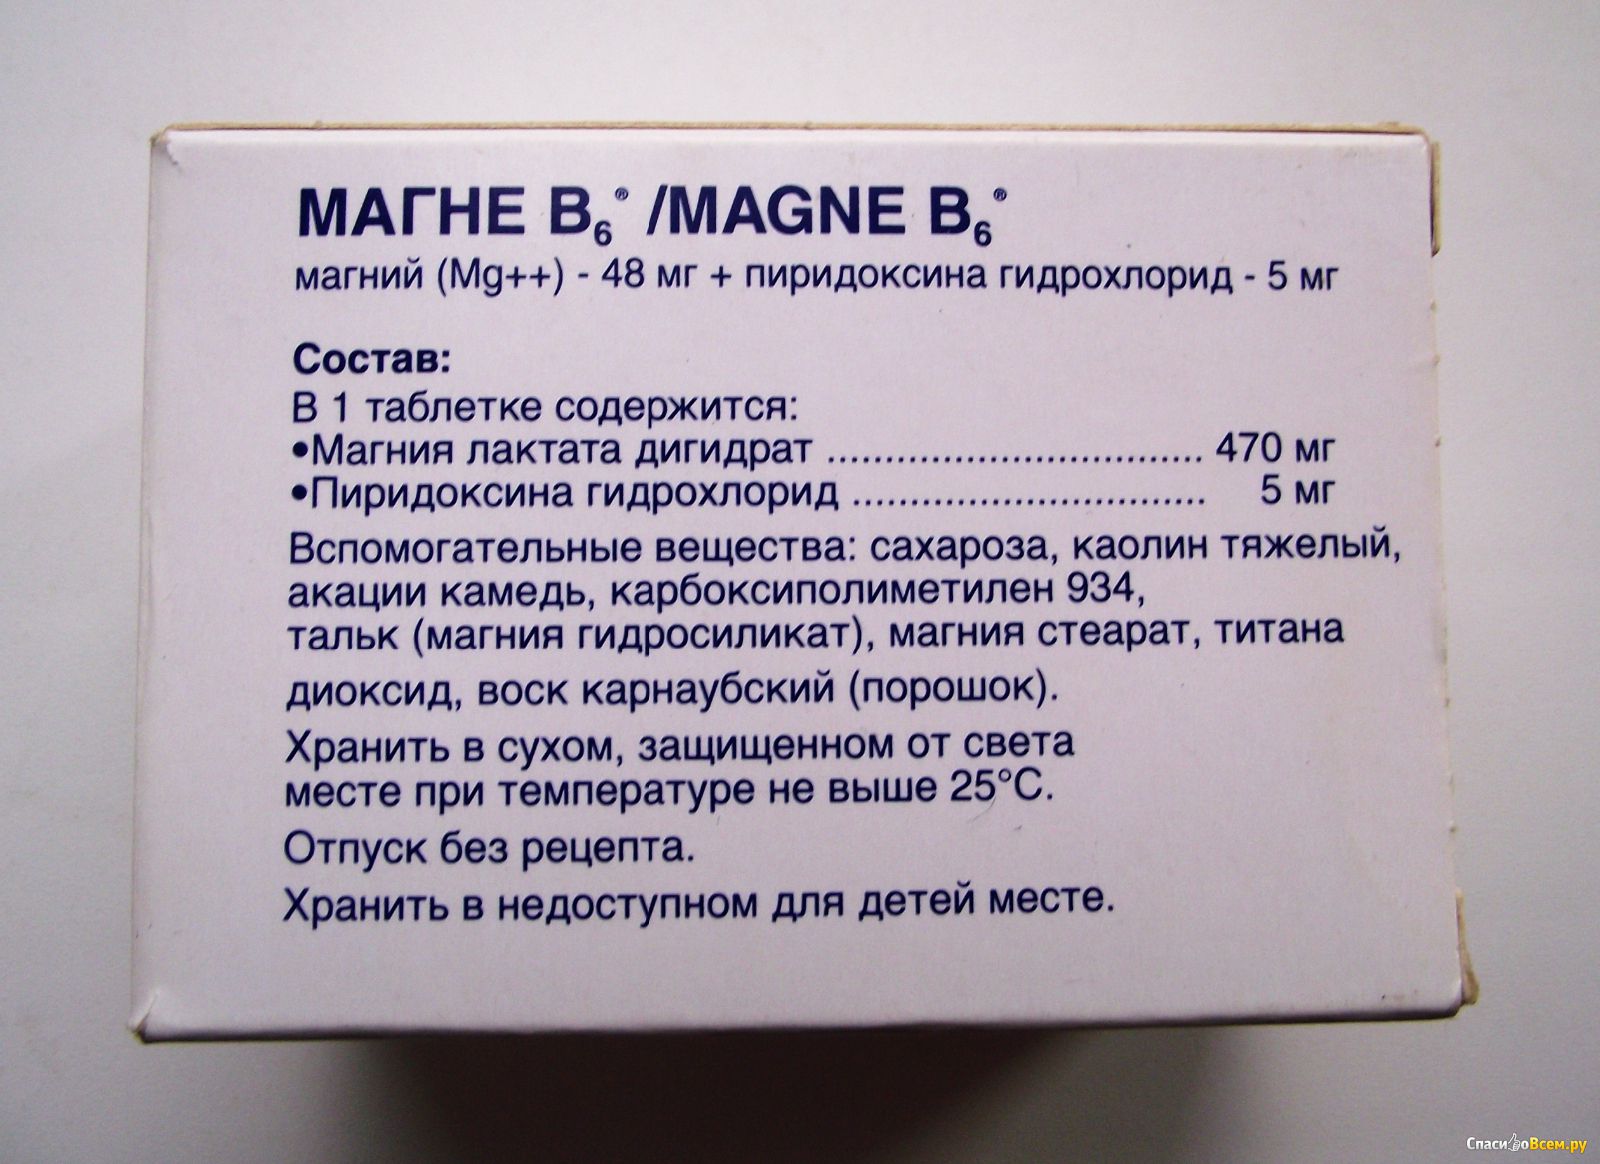 Дозировка б 6. Магний в6 состав. Магний в6 суточная дозировка. Магний б6 + пиридоксина гидрохлорид.